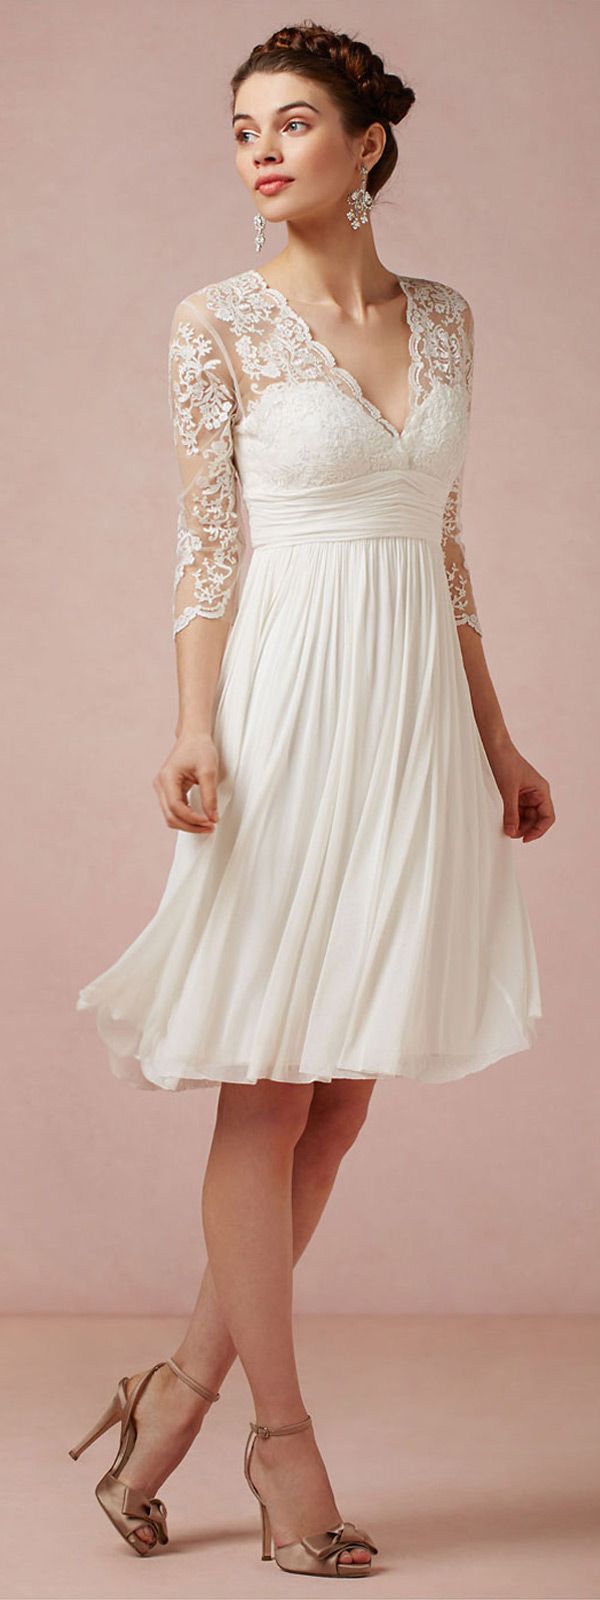 white lace empire waist dress